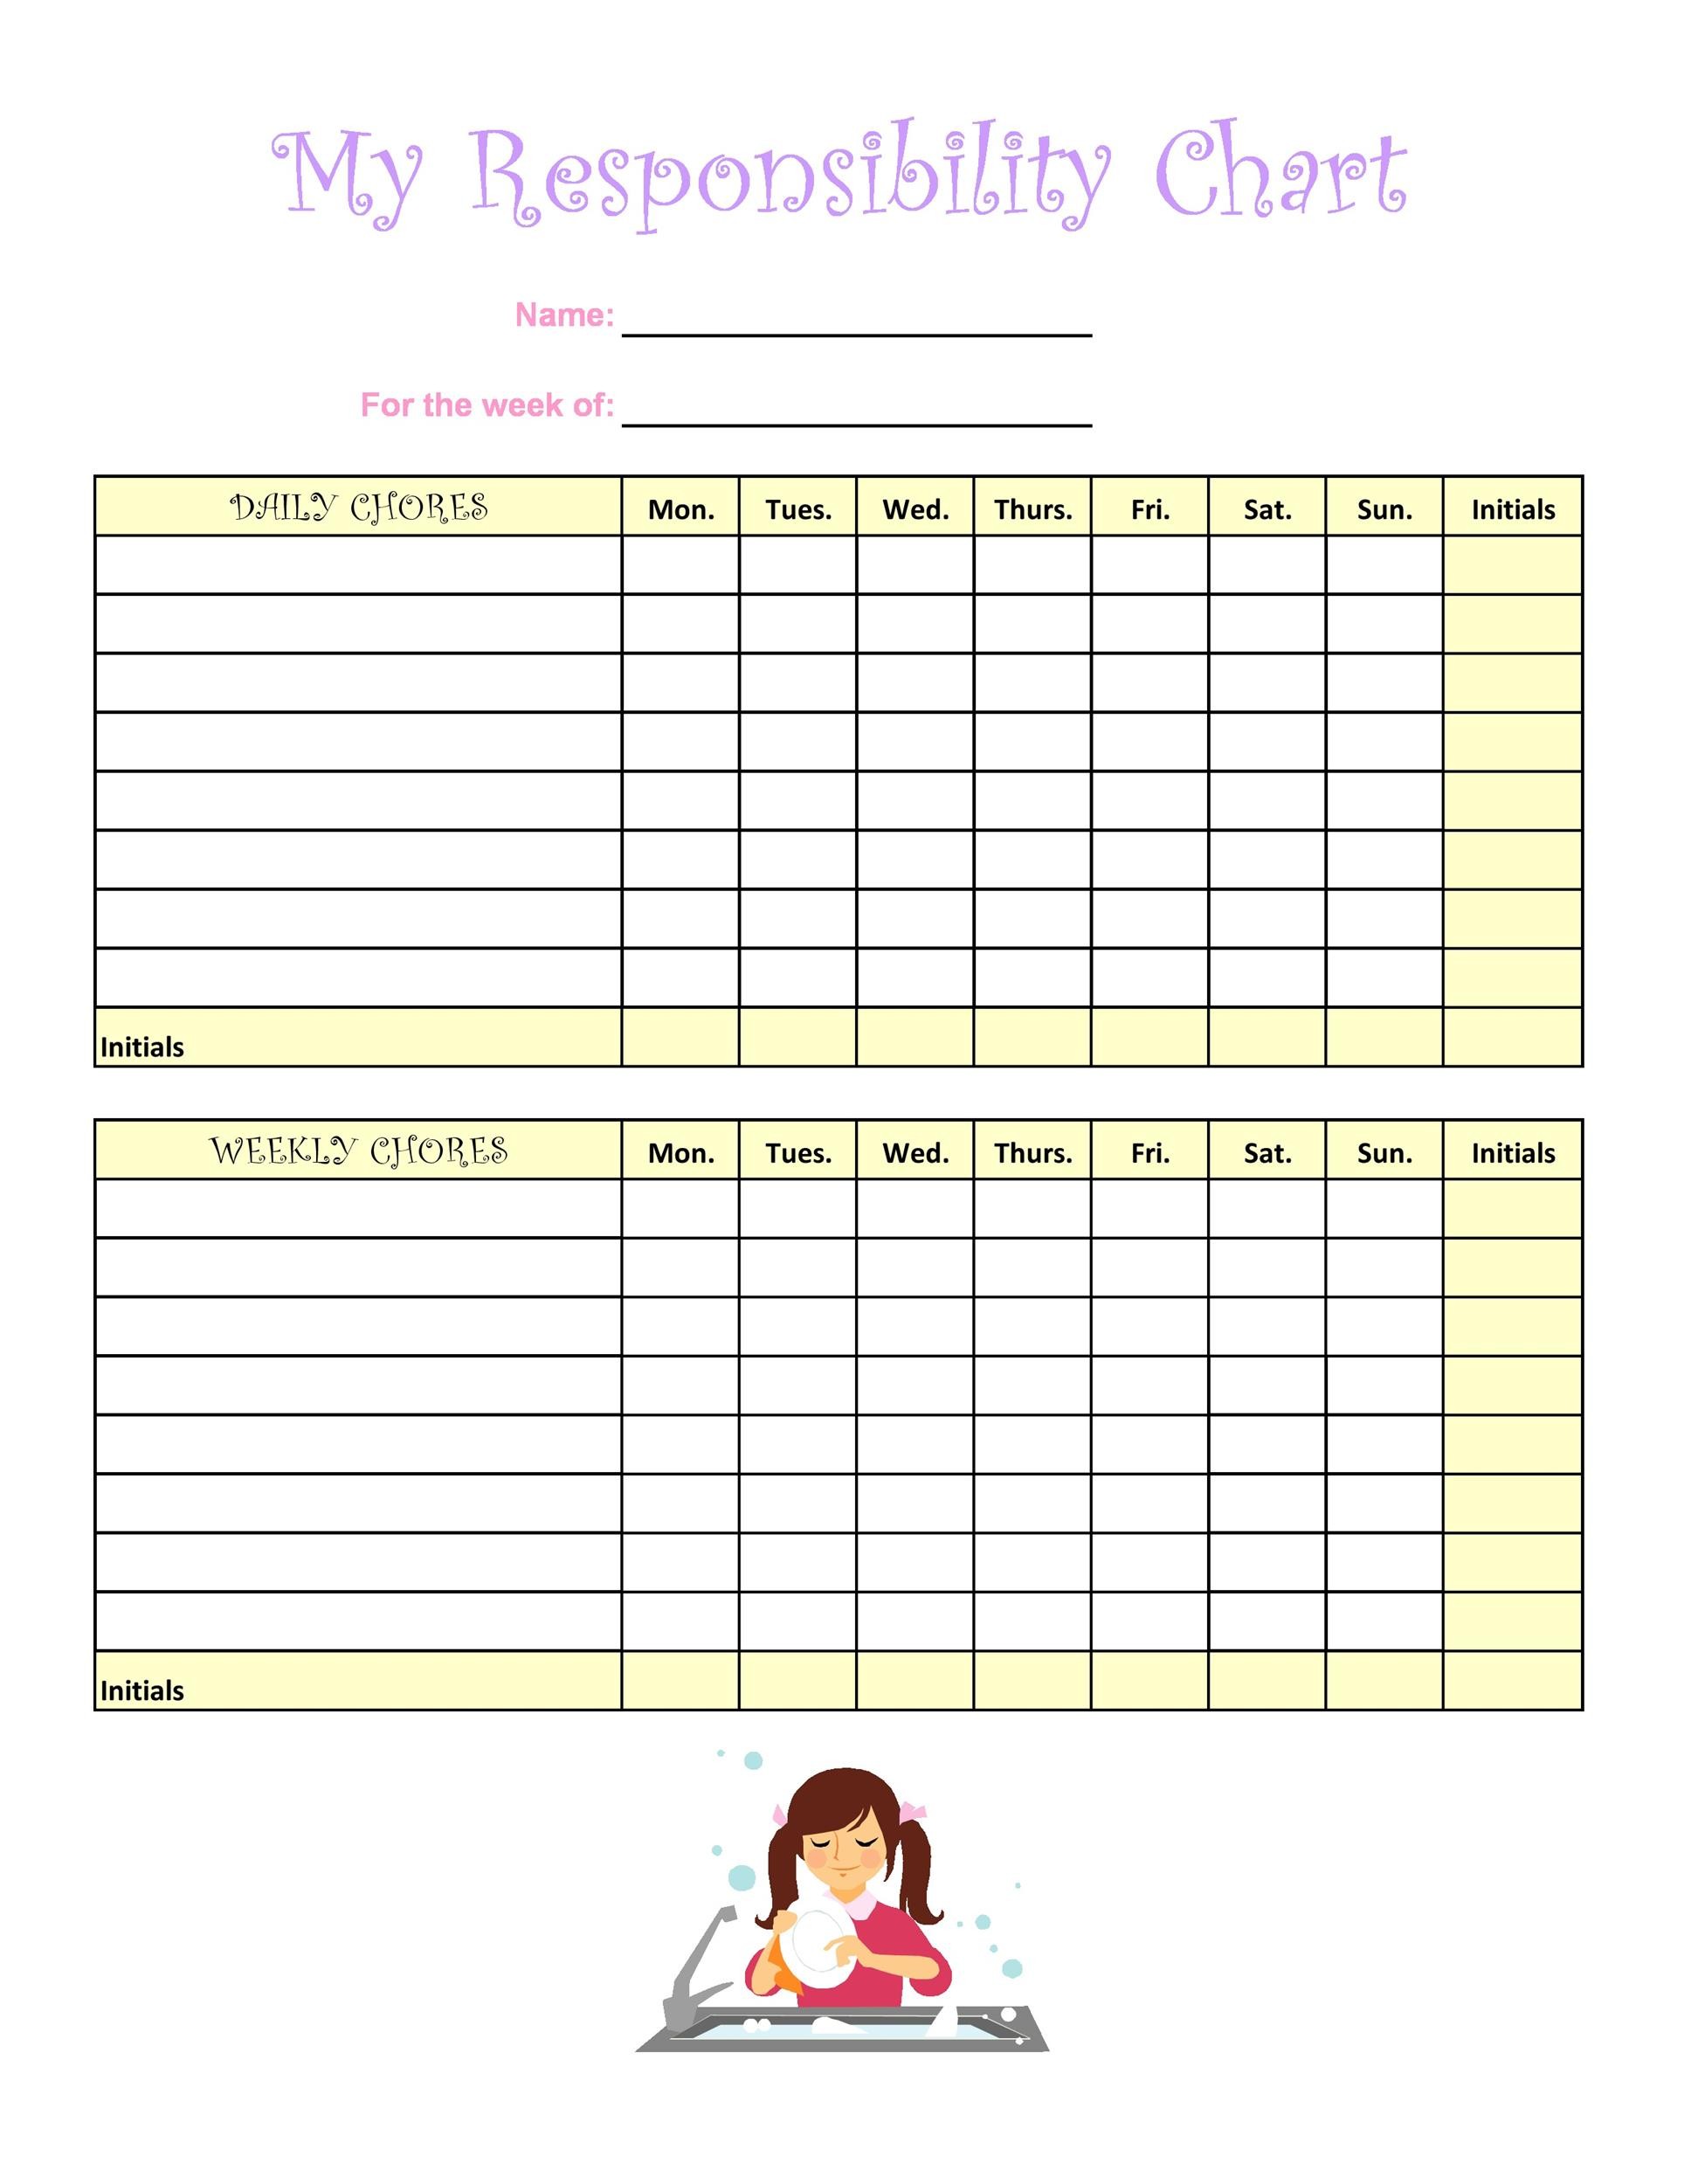 Diy Chore Chart Printable